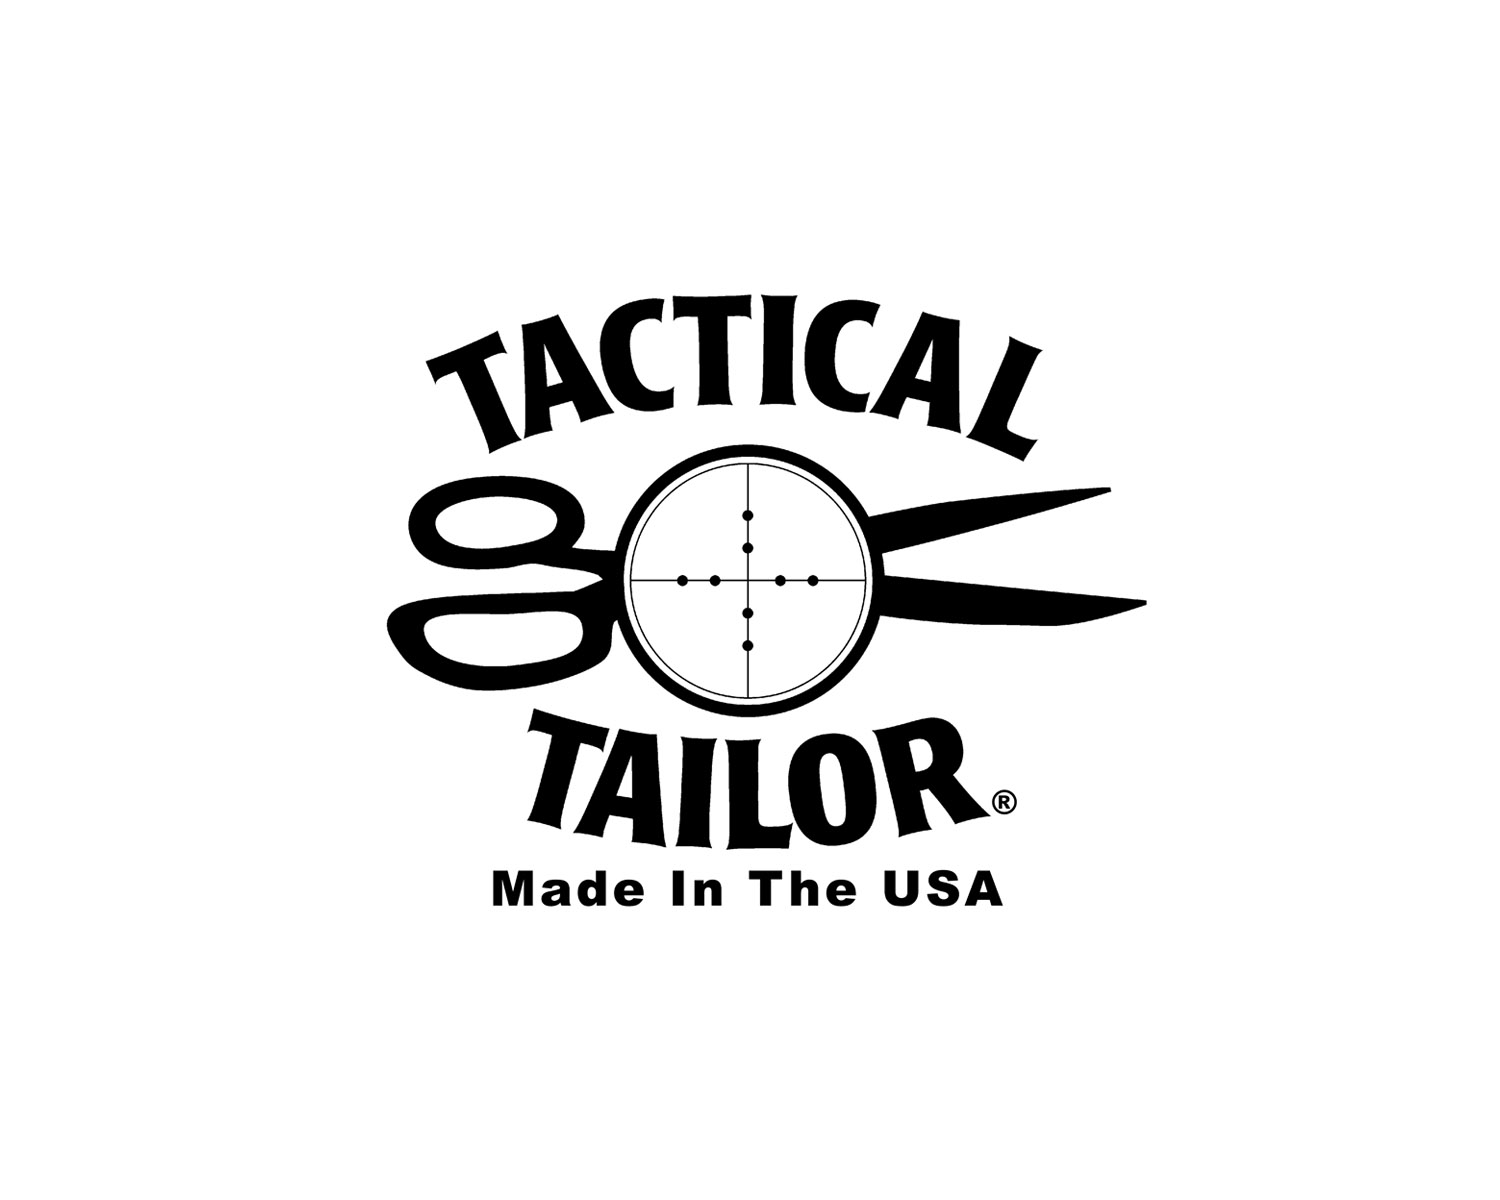 13-unbelievable-facts-about-tactical-tailor